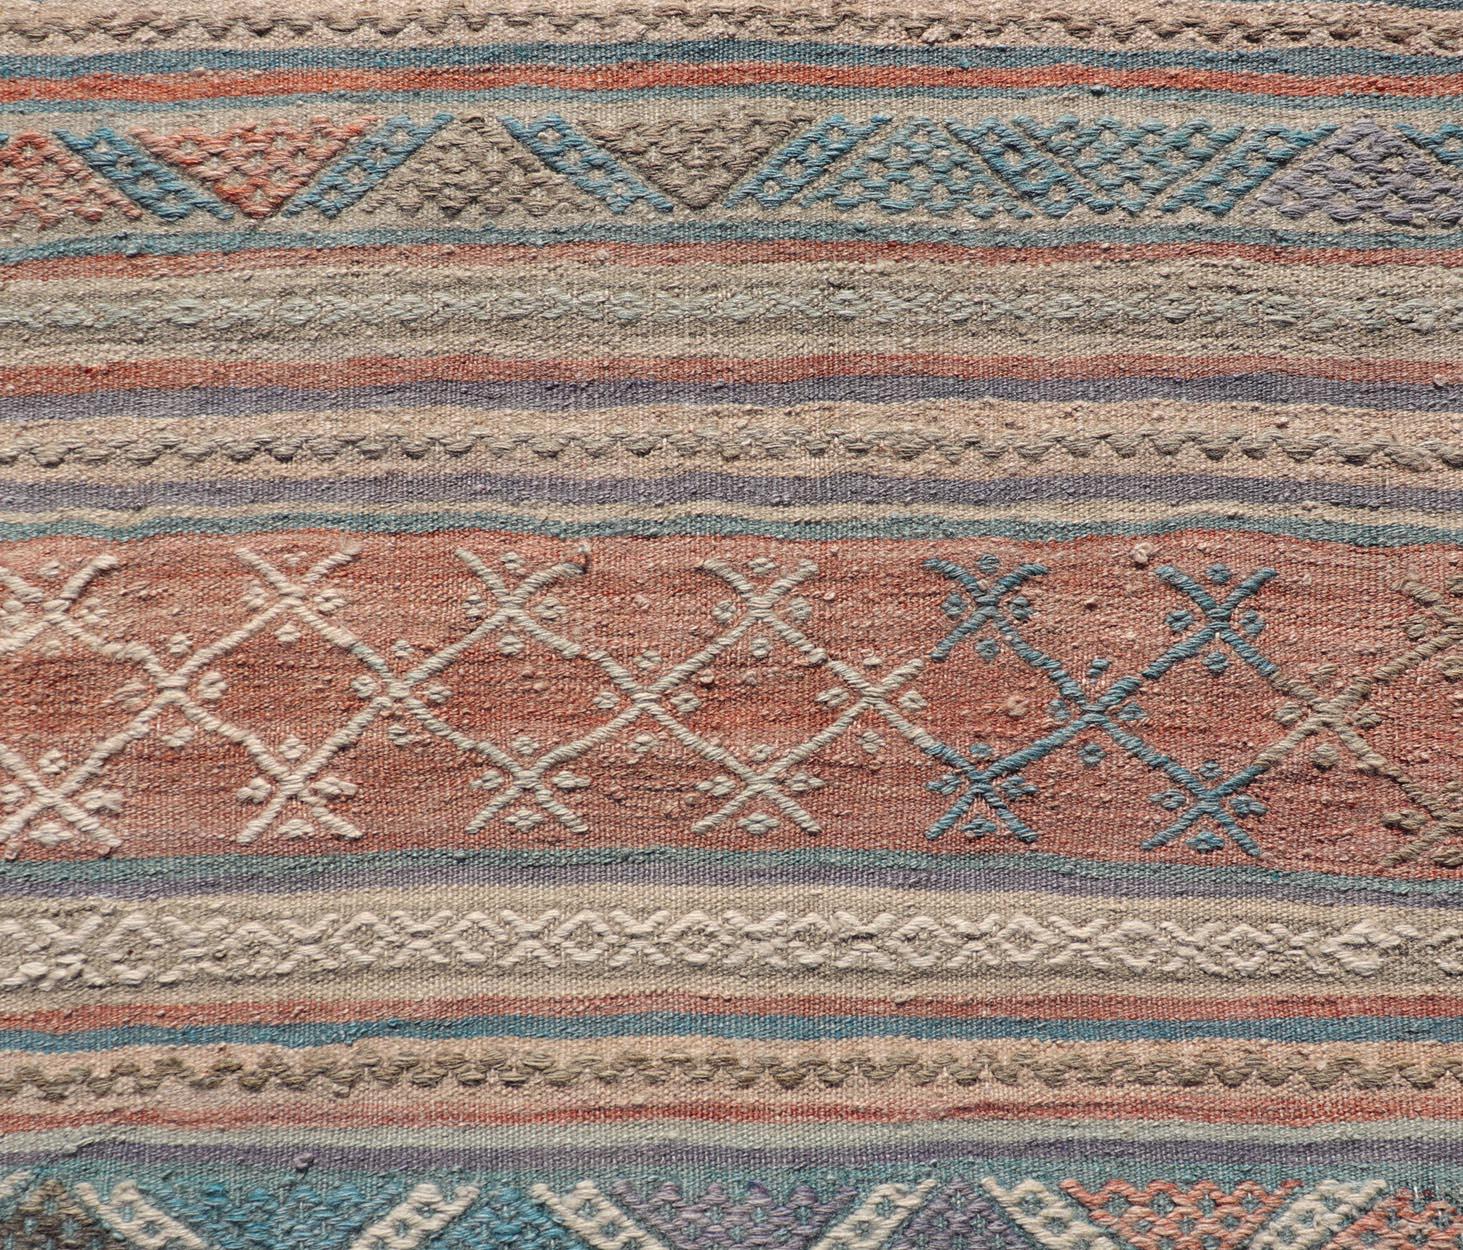 Measures: 2'8 x 9'9 
Vintage colorful Kilim Runner with stripe design in orange, gray, & light green. Keivan Woven Arts / rug TU-NED-5006, country of origin / type: Turkey / Kilim, circa 1950.
Featuring a striking stripe design, this unique 1950s